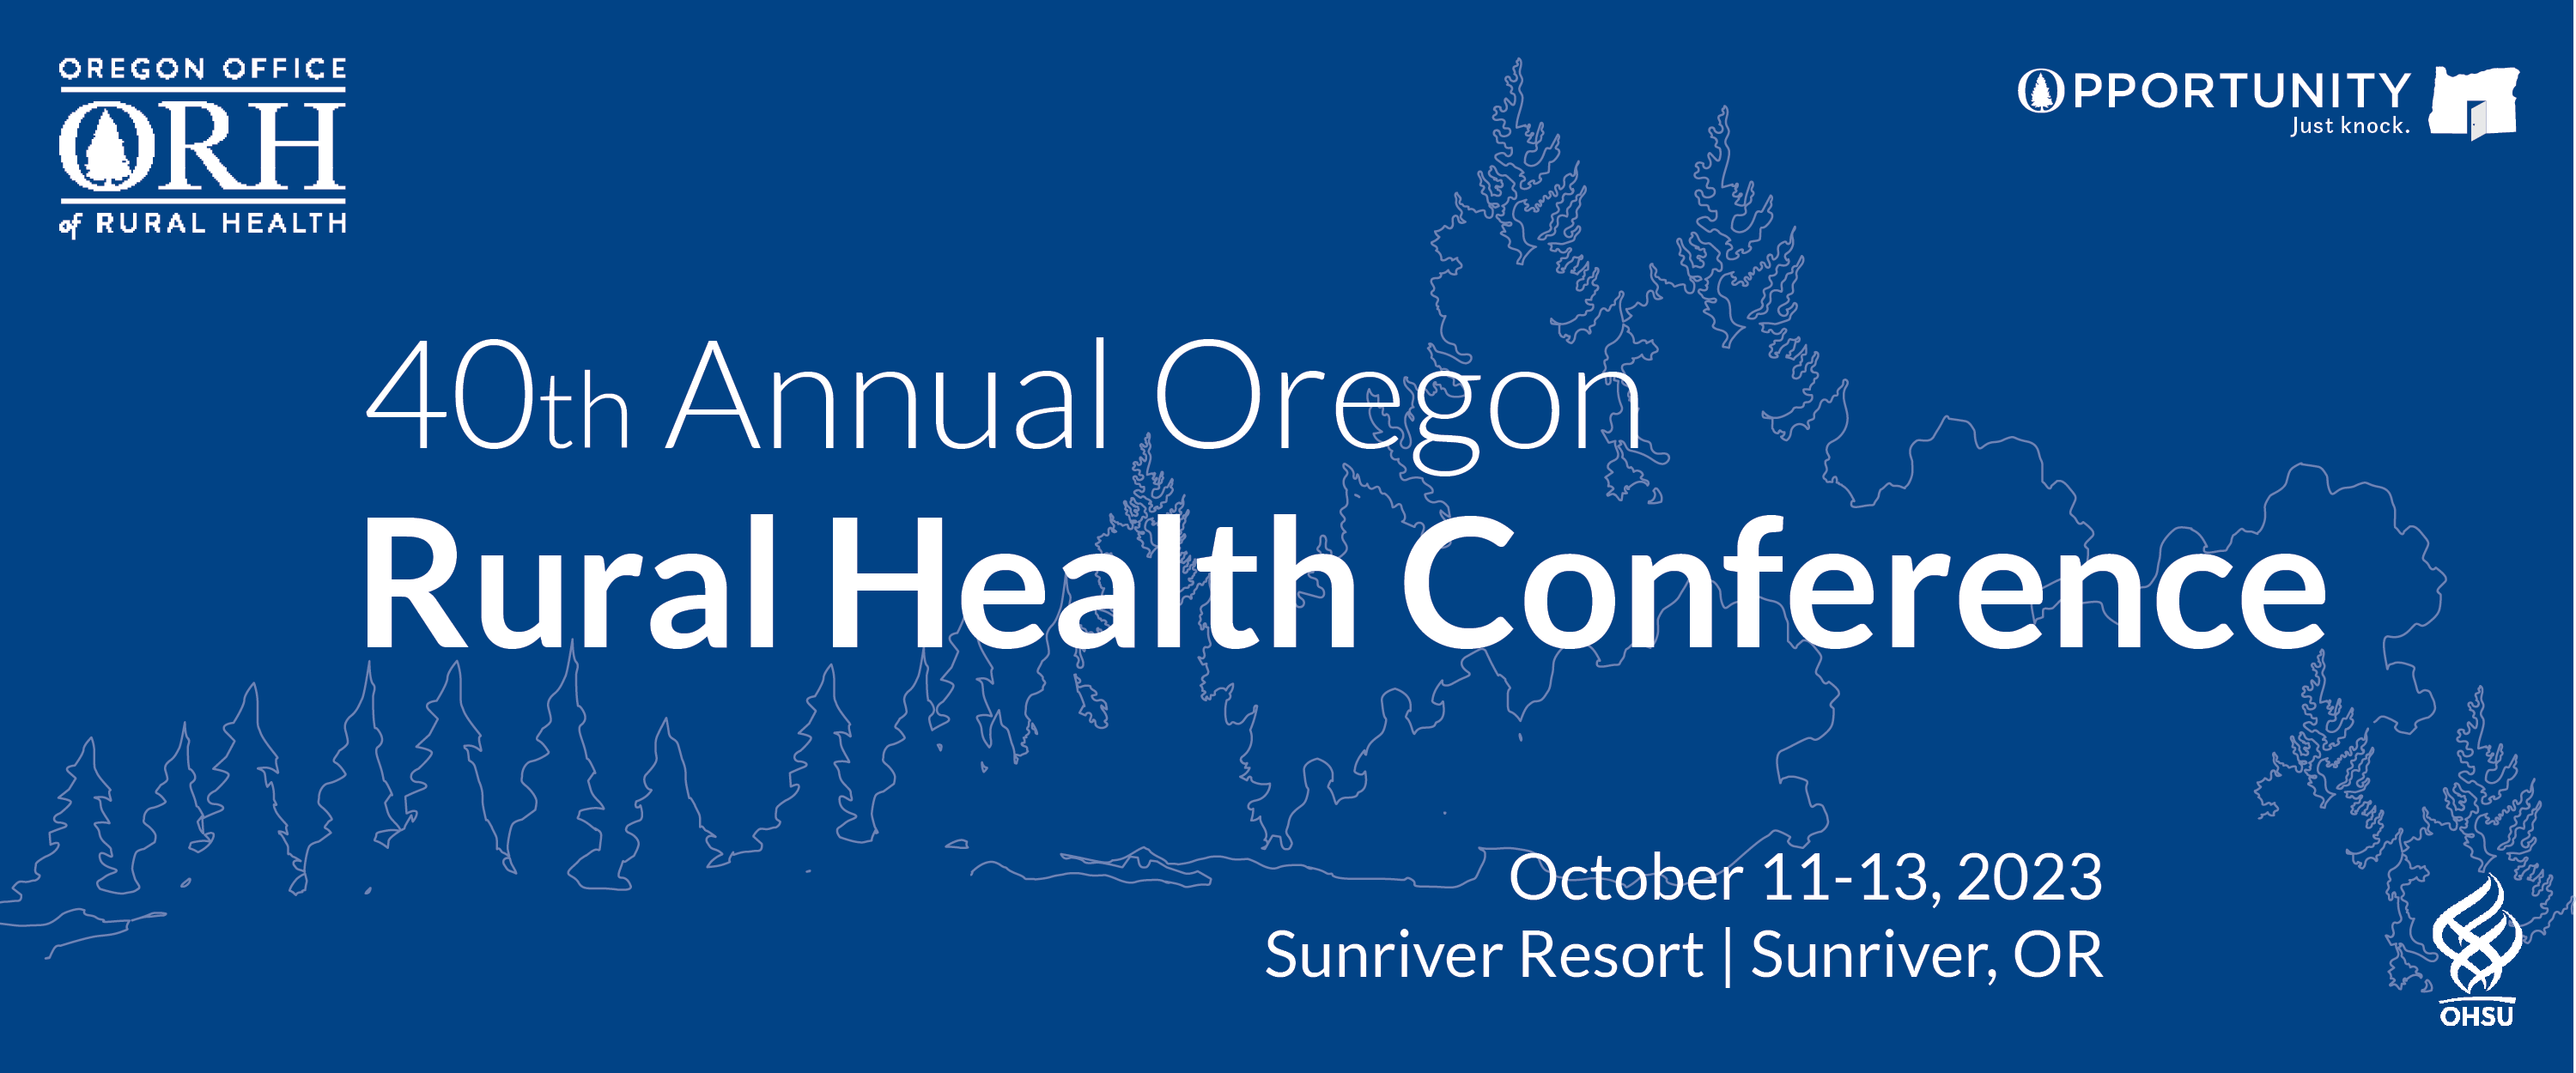 Oregon Rural Health Conference OHSU